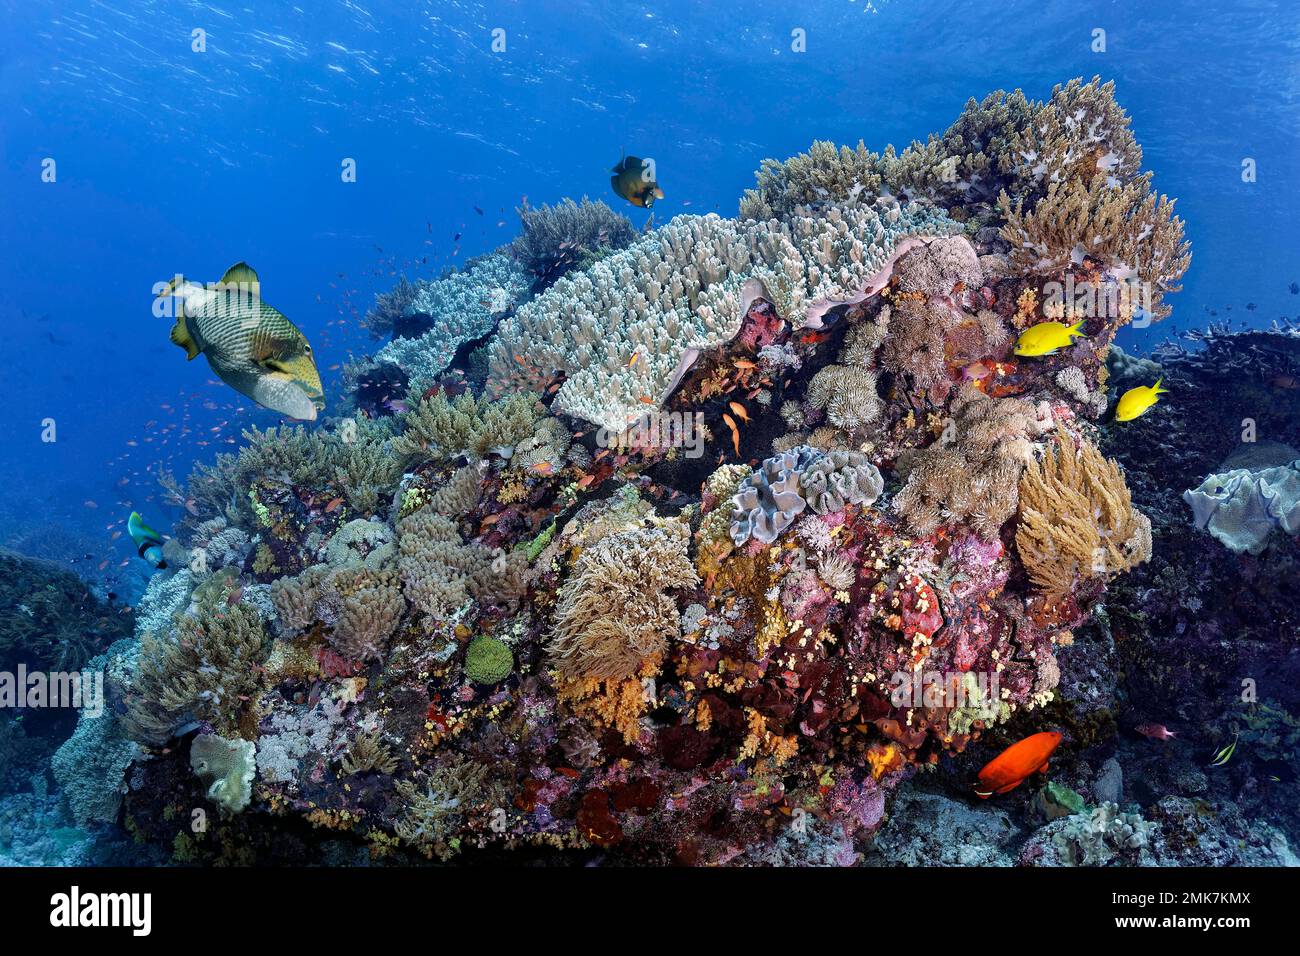 Intaktes Korallenriff, Korallenblock mit verschiedenen Weichkorallen (Alcyonacea), Titan-Triggerfisch oben links (Balistoides viridescens), Flaggenschwanz unten links Stockfoto